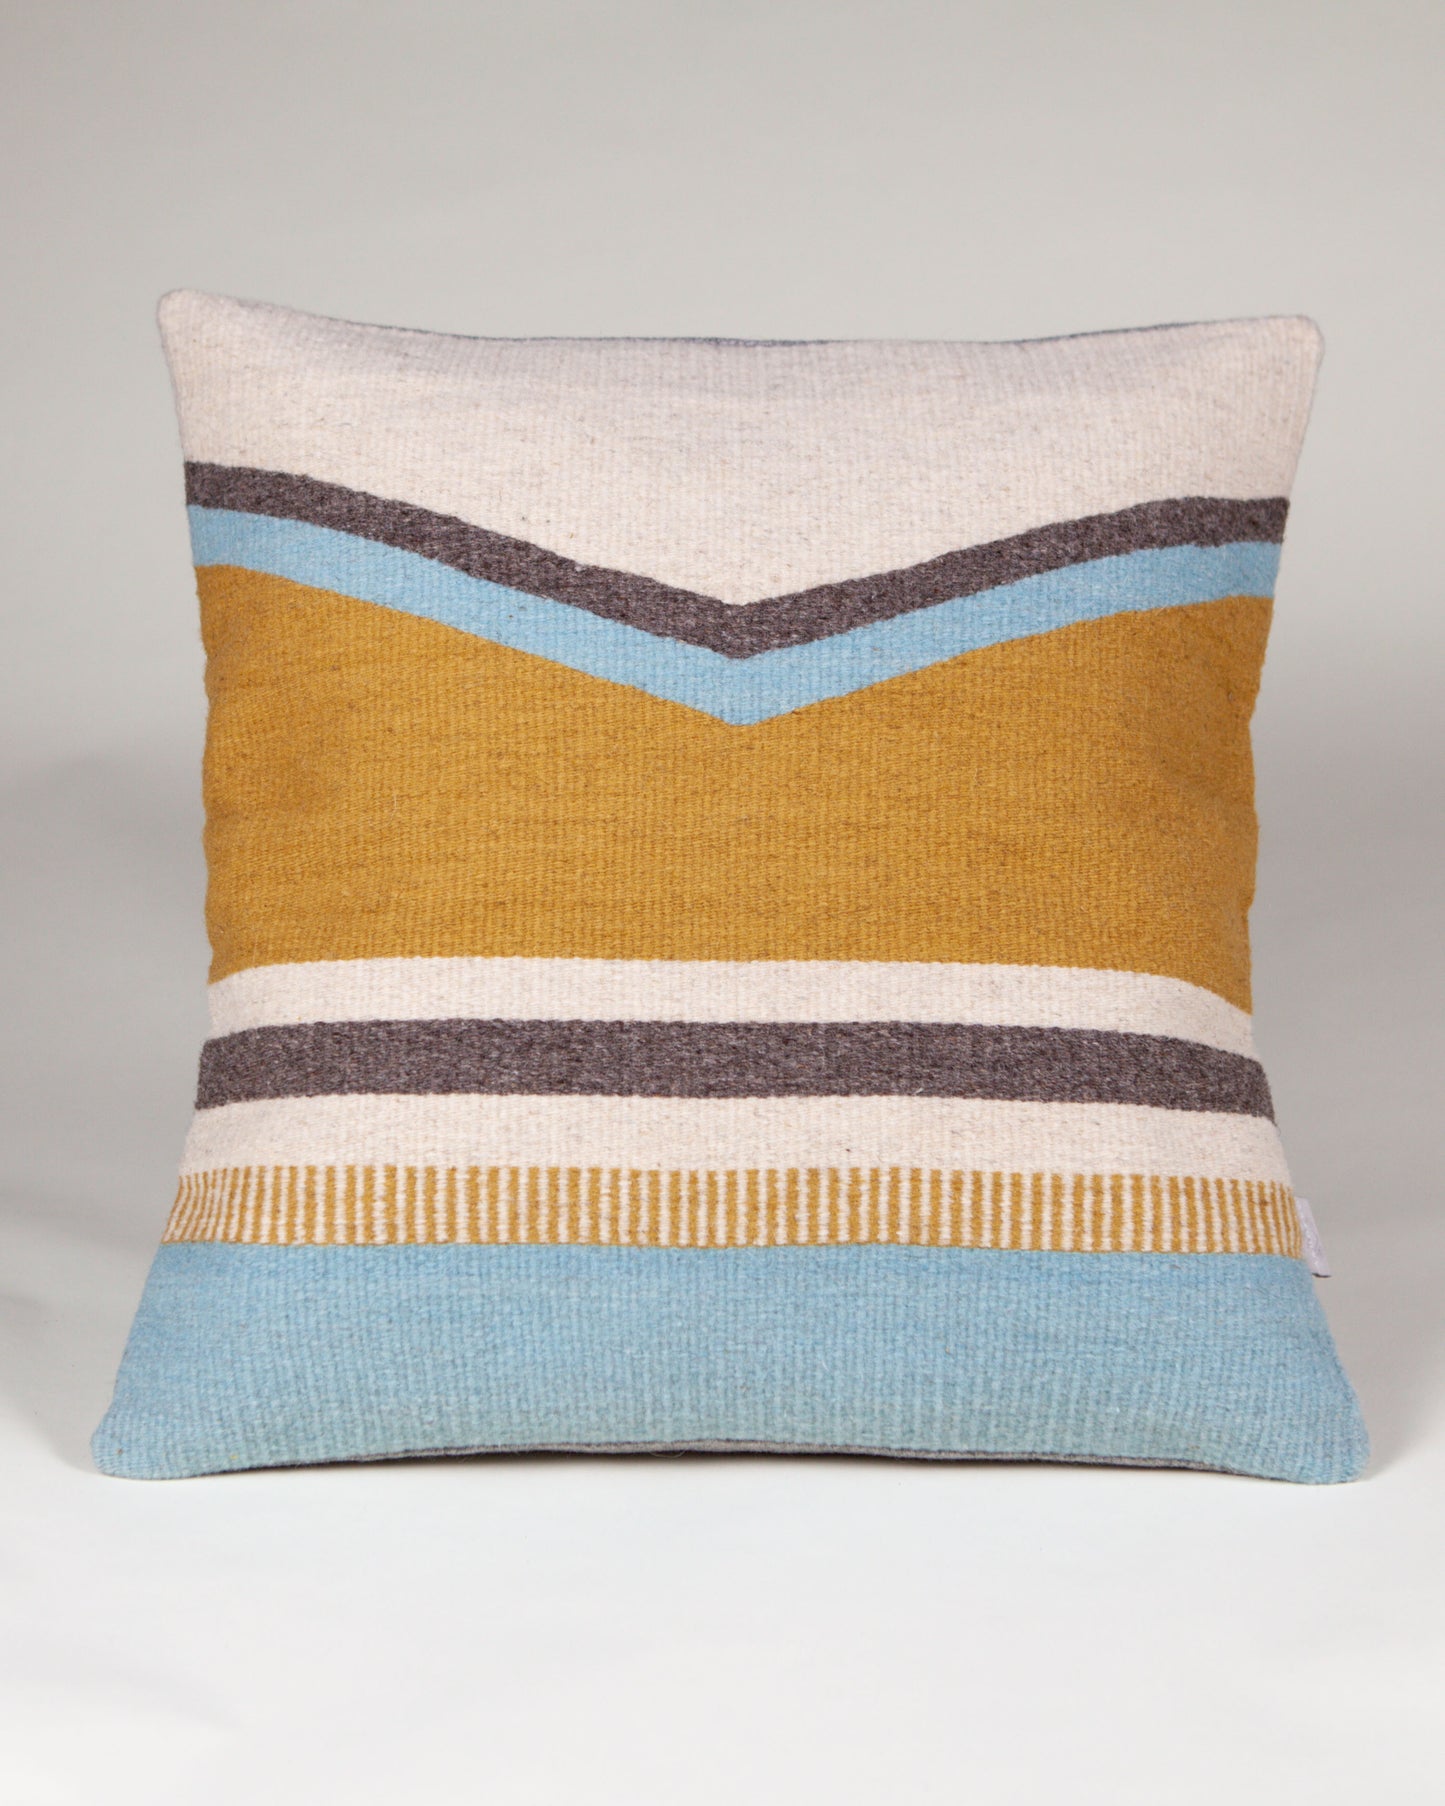 Handwoven wool pillow grey yellow blue geometric design